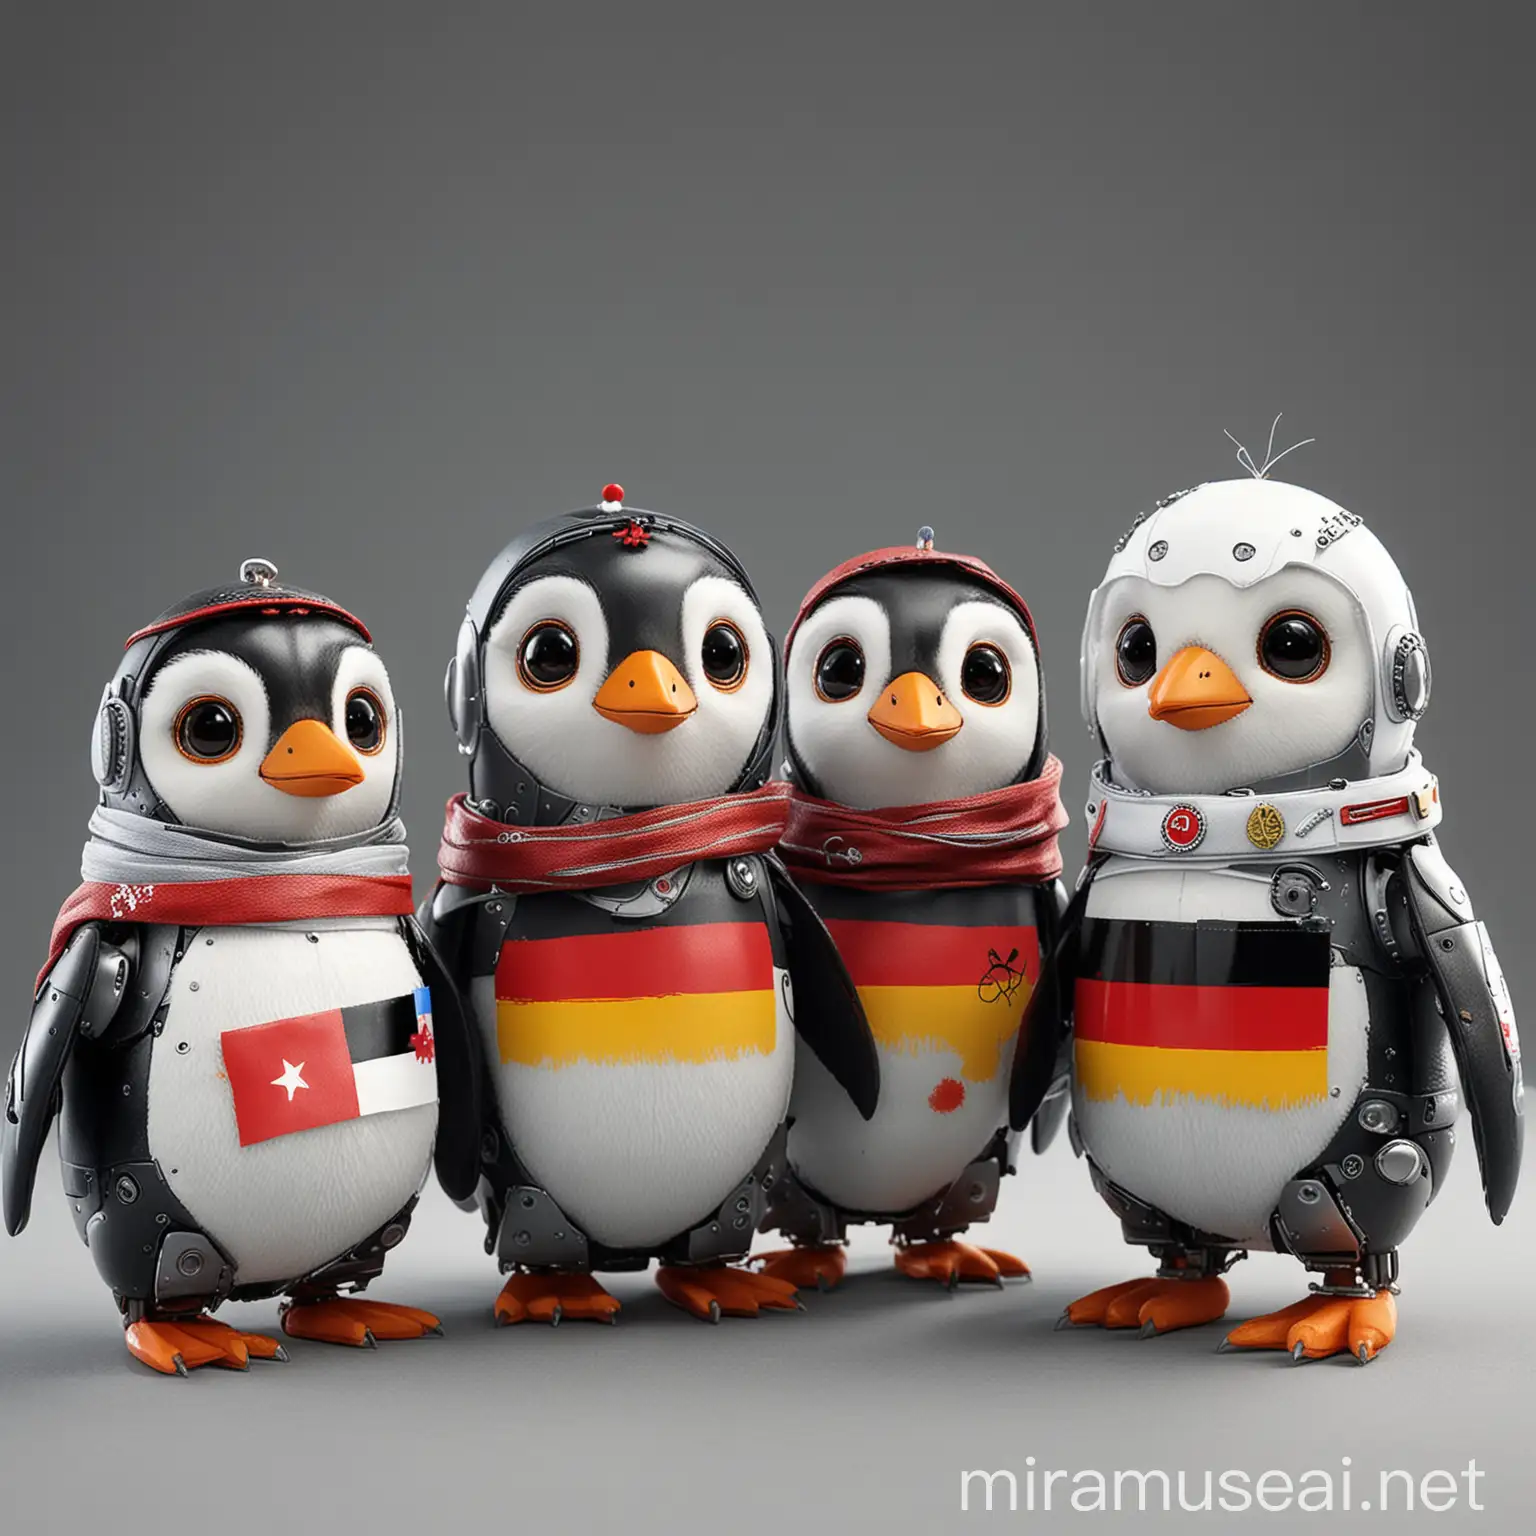 3 cute robot penguins, each dressed as Türkiye and Germany, France
